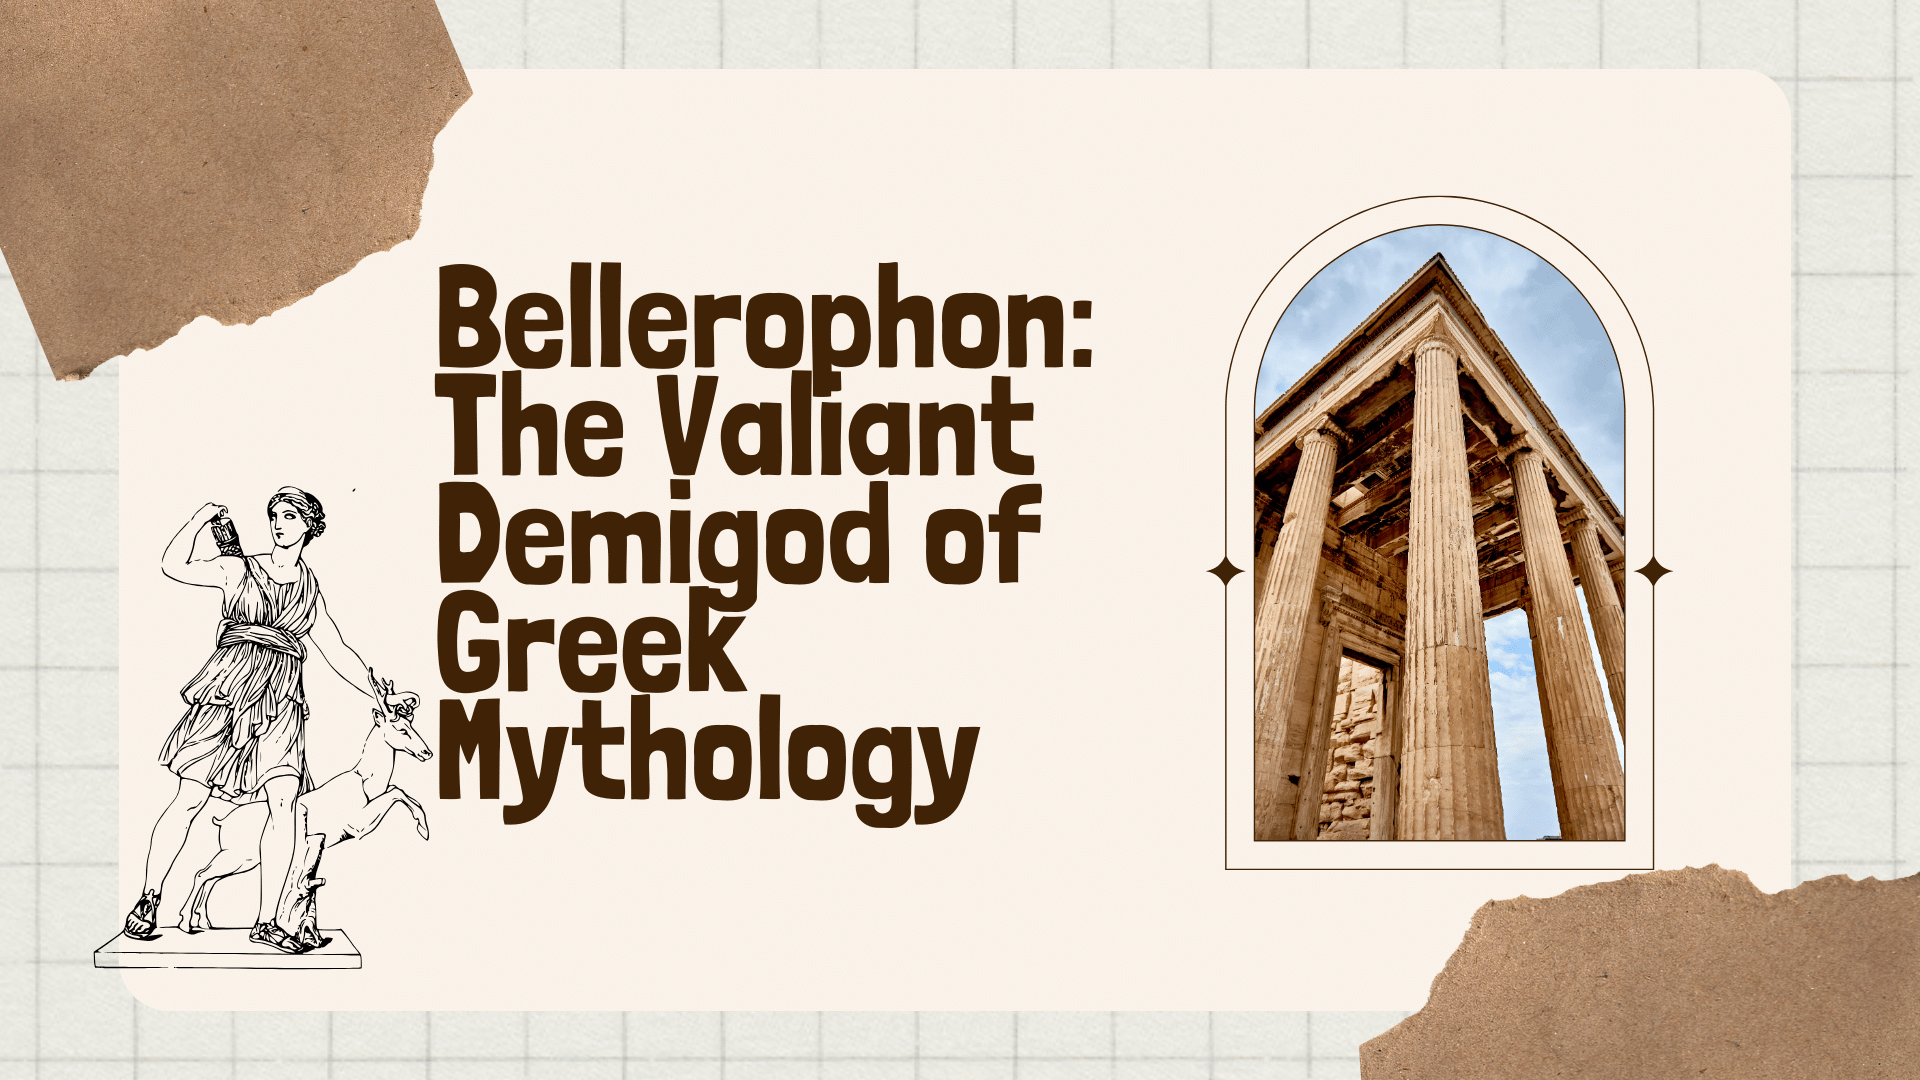 Bellerophon: The Valiant Demigod of Greek Mythology